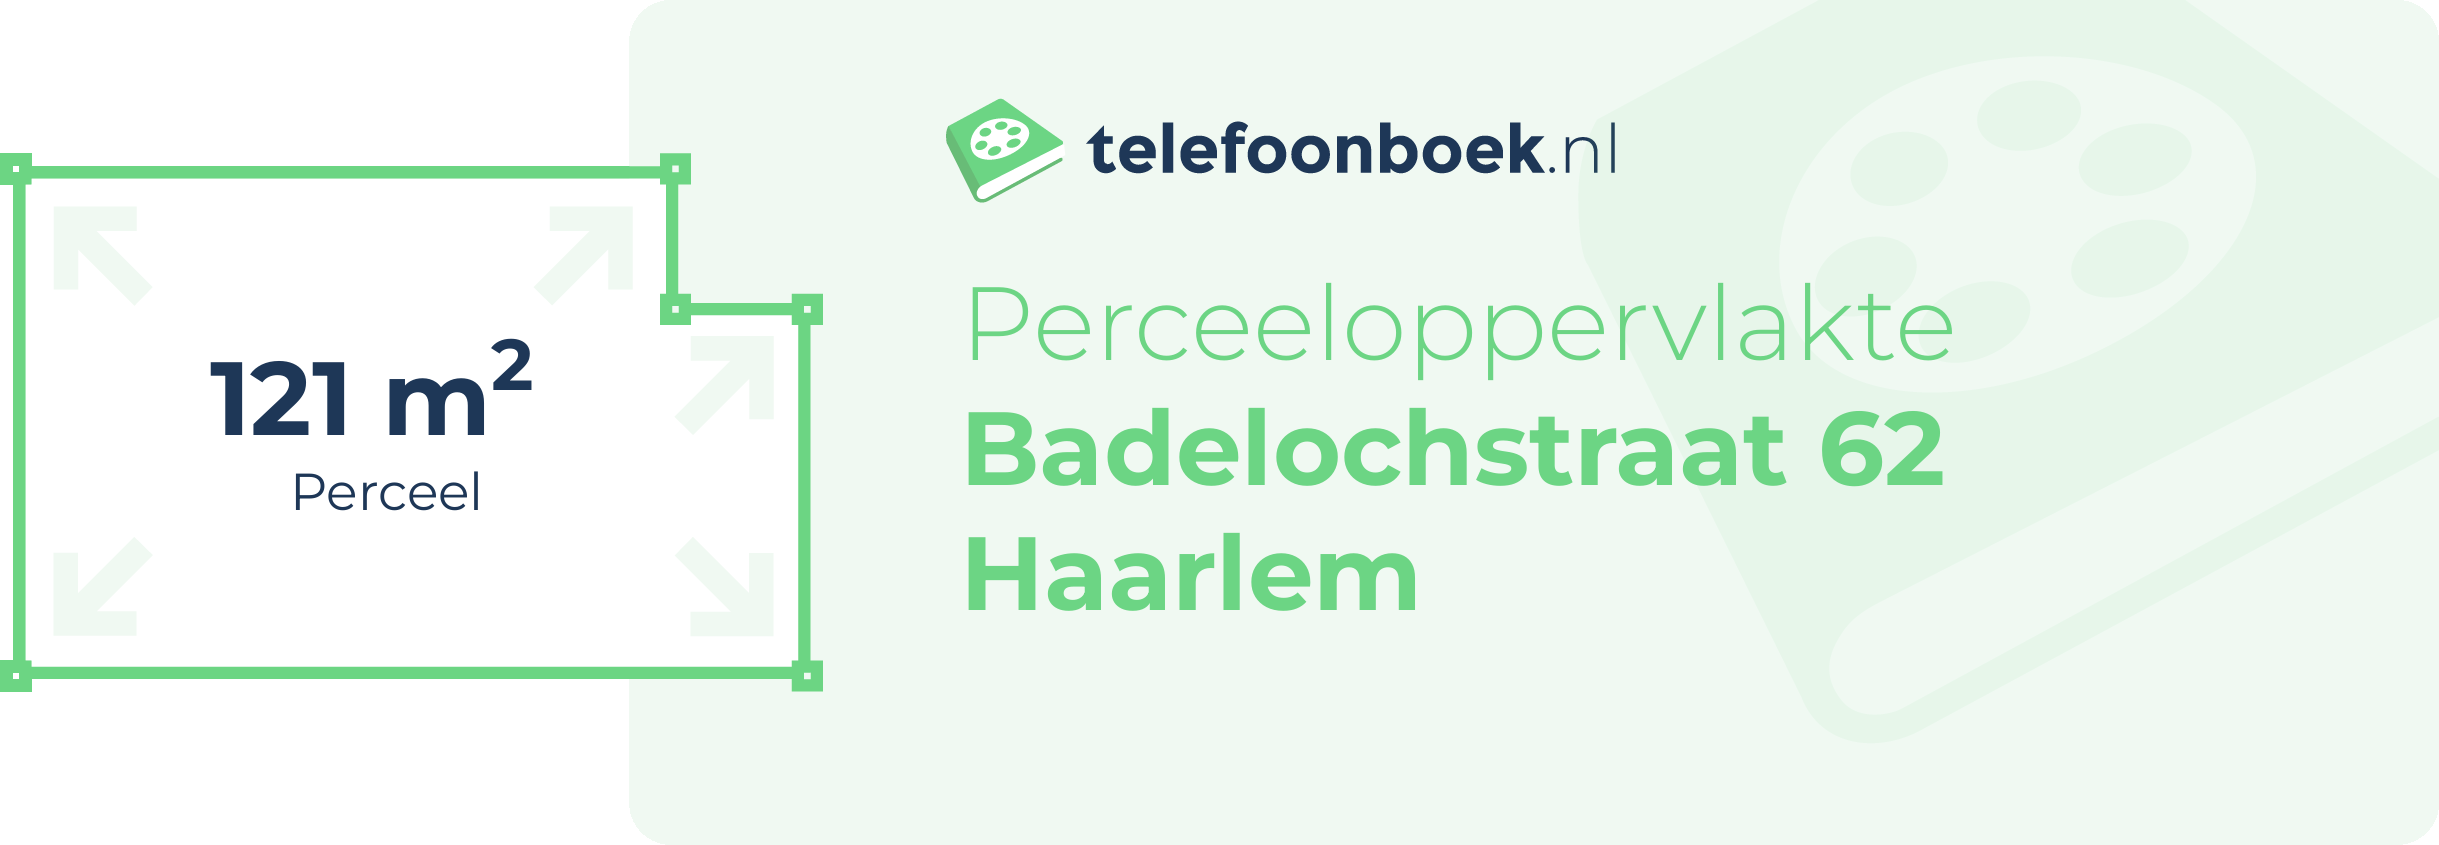 Perceeloppervlakte Badelochstraat 62 Haarlem